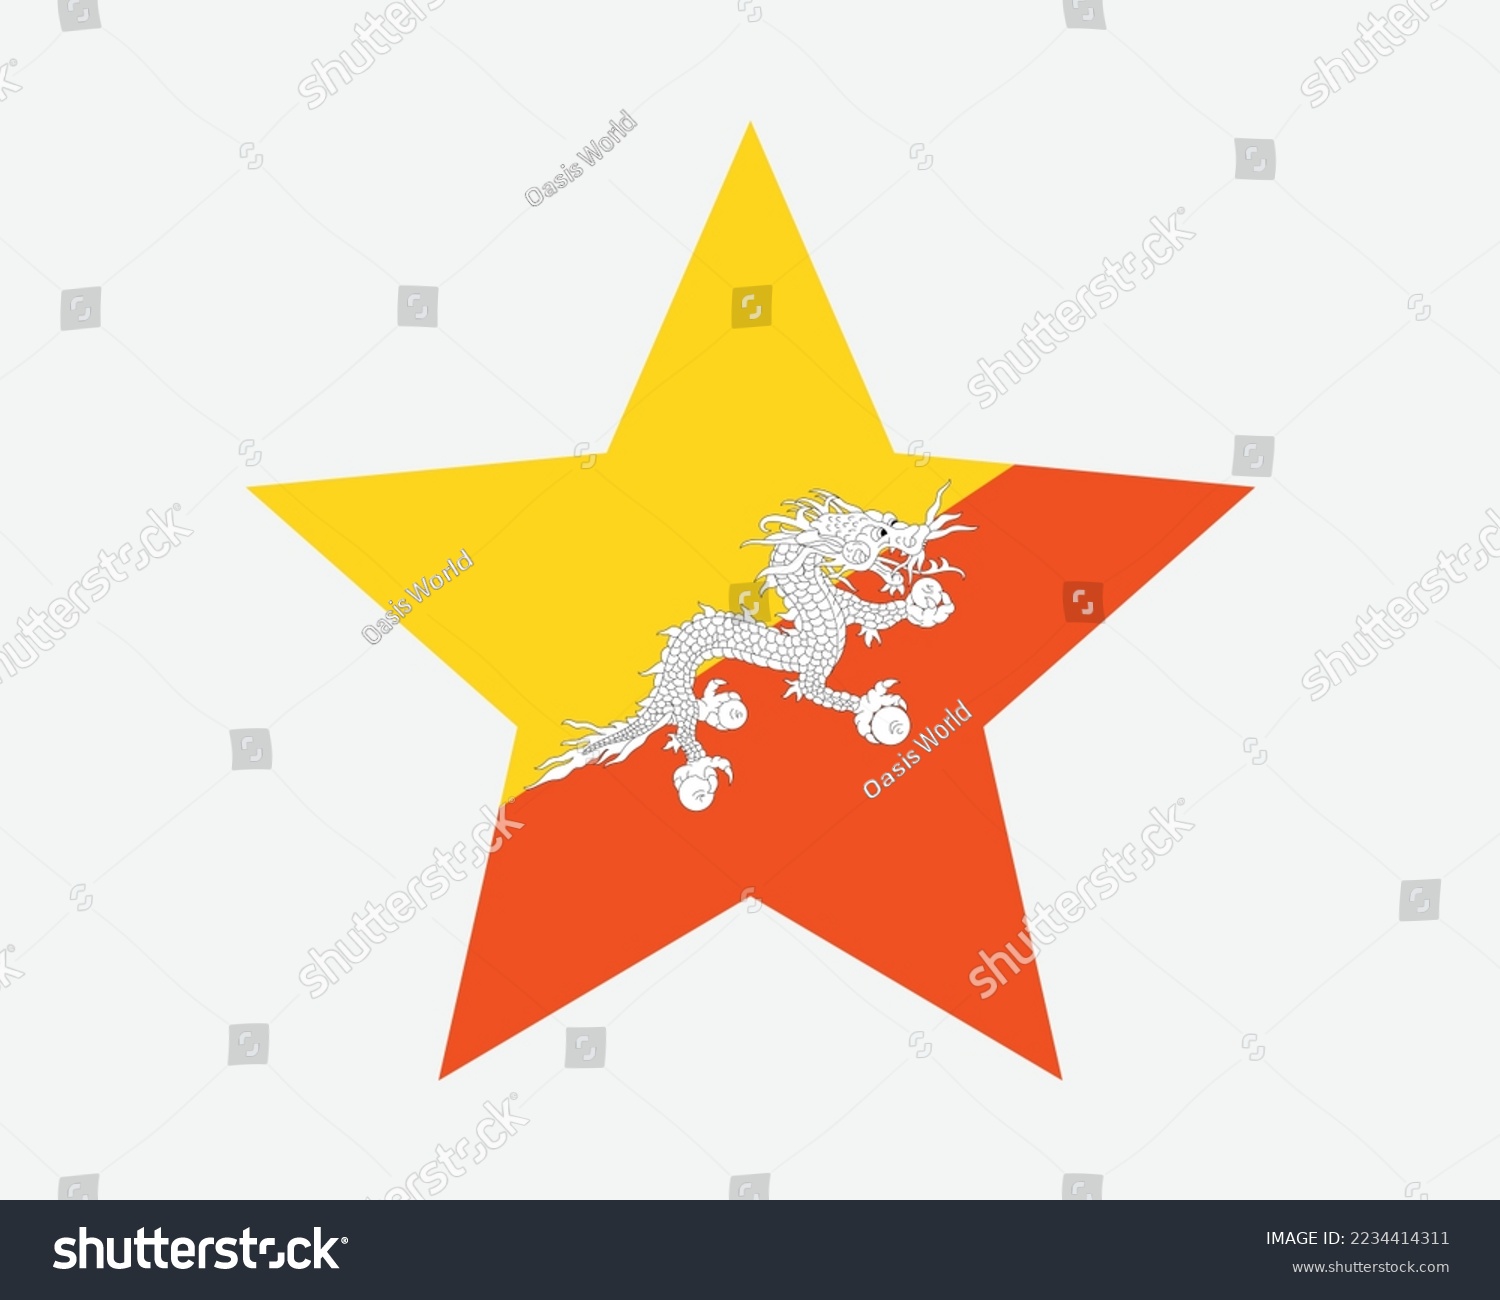 SVG of Bhutan Star Flag. Bhutanese Star Shape Flag. Country National Banner Icon Symbol Vector 2D Flat Artwork Graphic Illustration svg